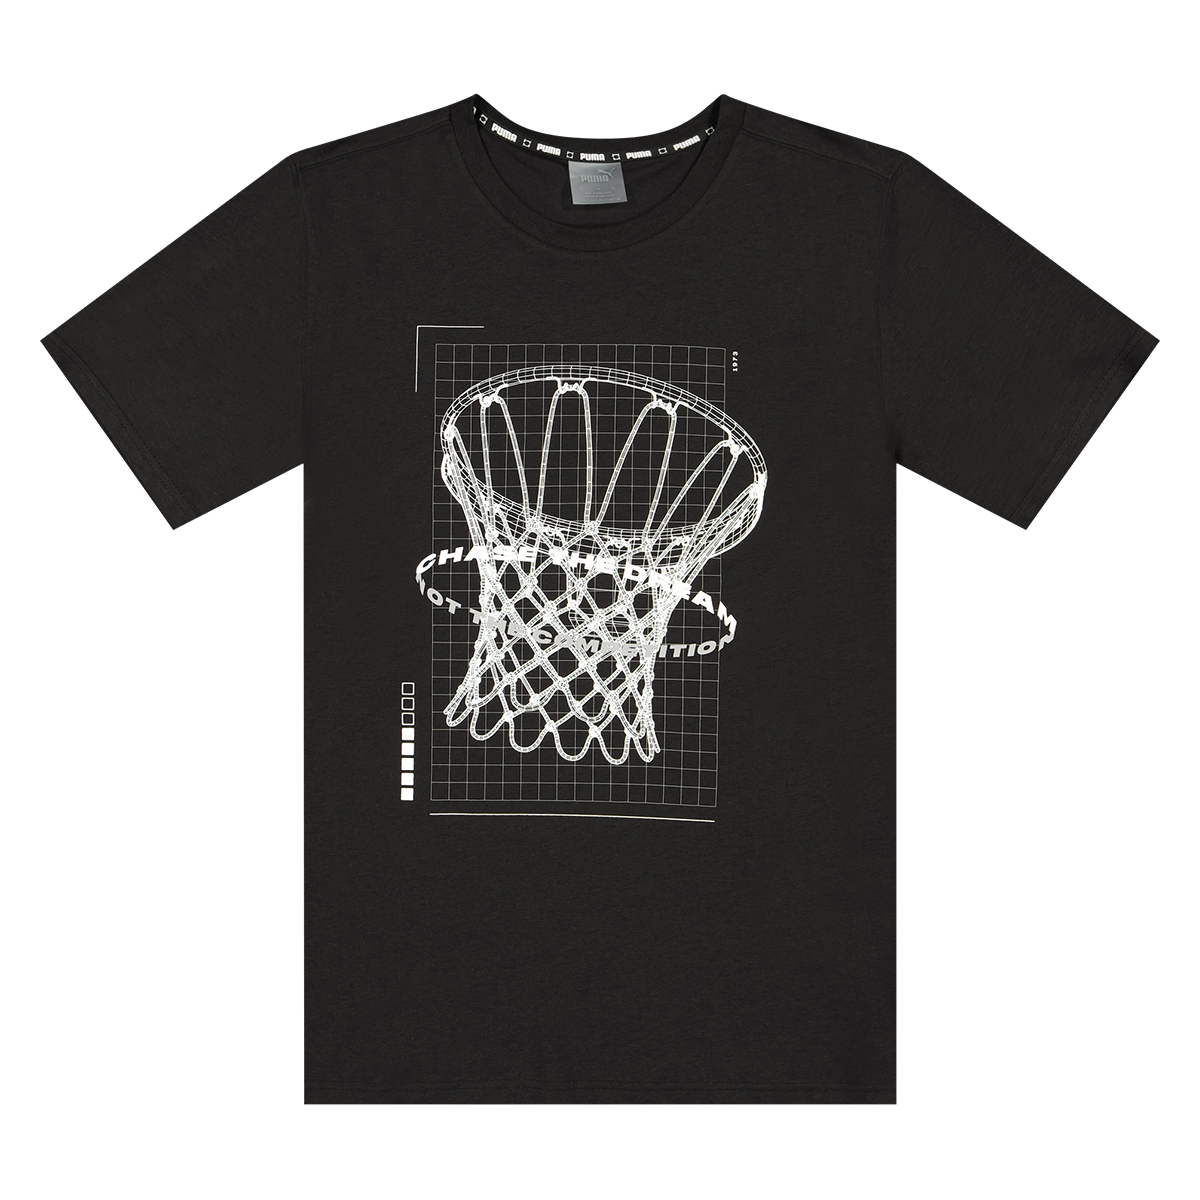 Buy Perimeter T-shirt 5 - N/A 0.0 on KICKZ.com!